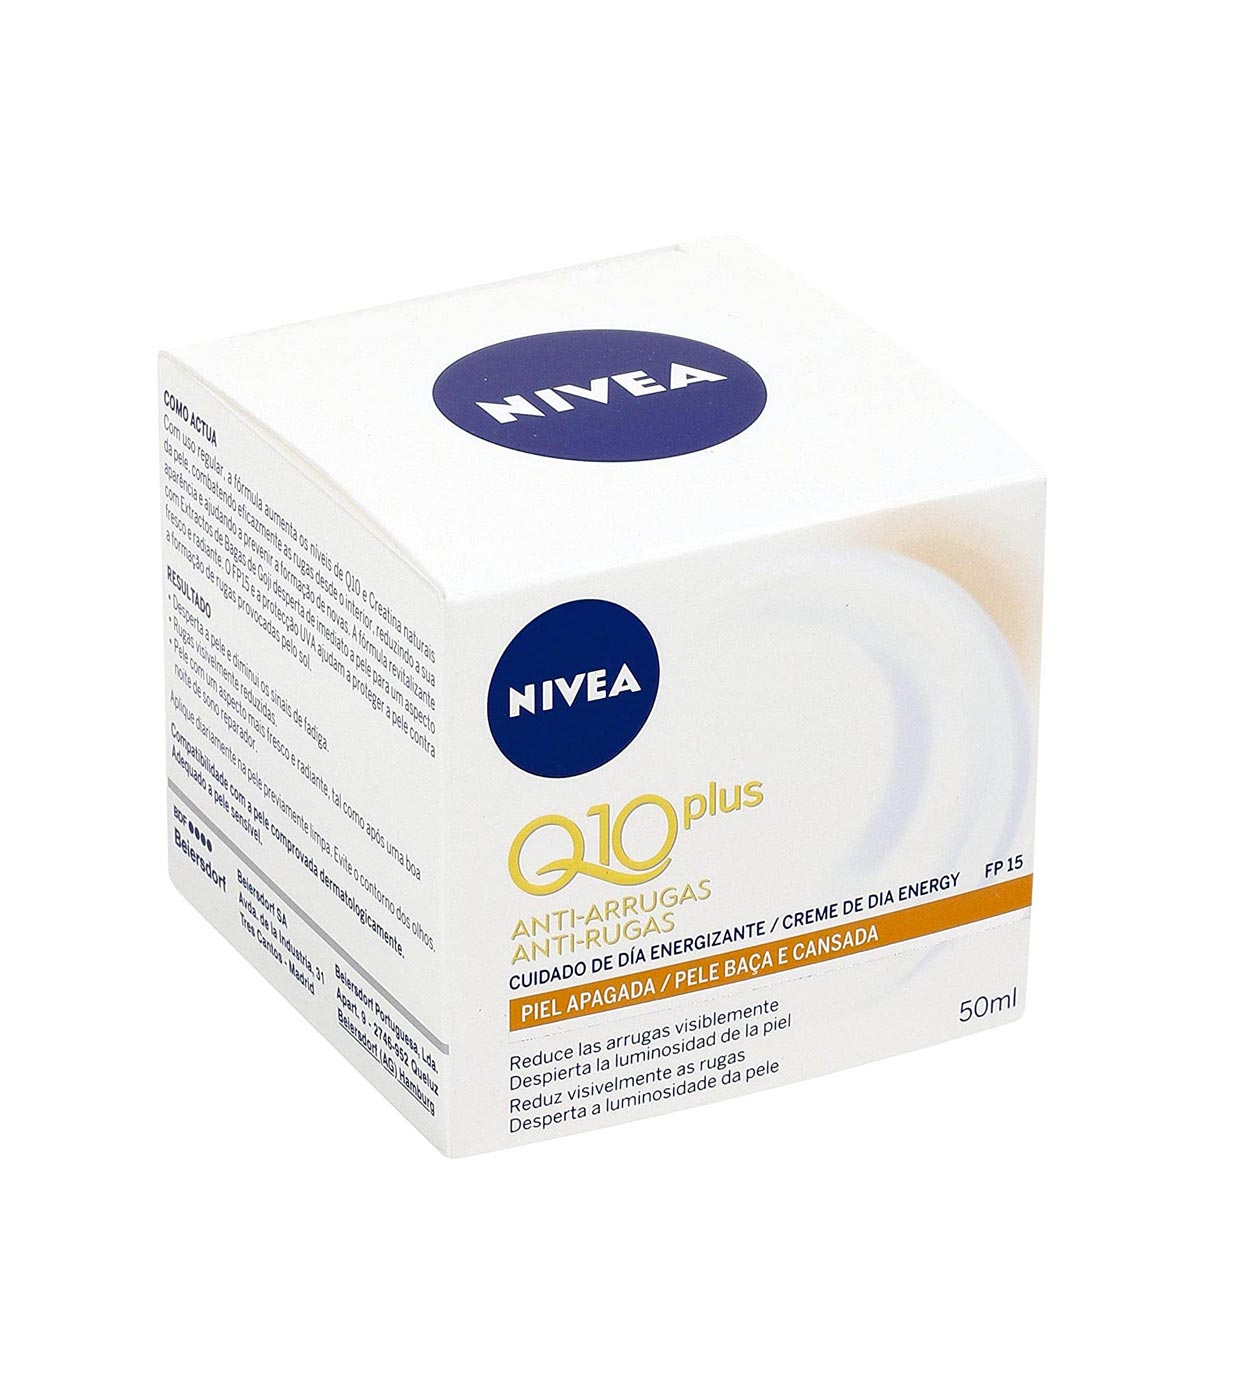 religie Gemoedsrust schade Buy Nivea - Energizing anti-wrinkle day cream Q10 Energy PF15 - Lifeless  skin | Maquibeauty